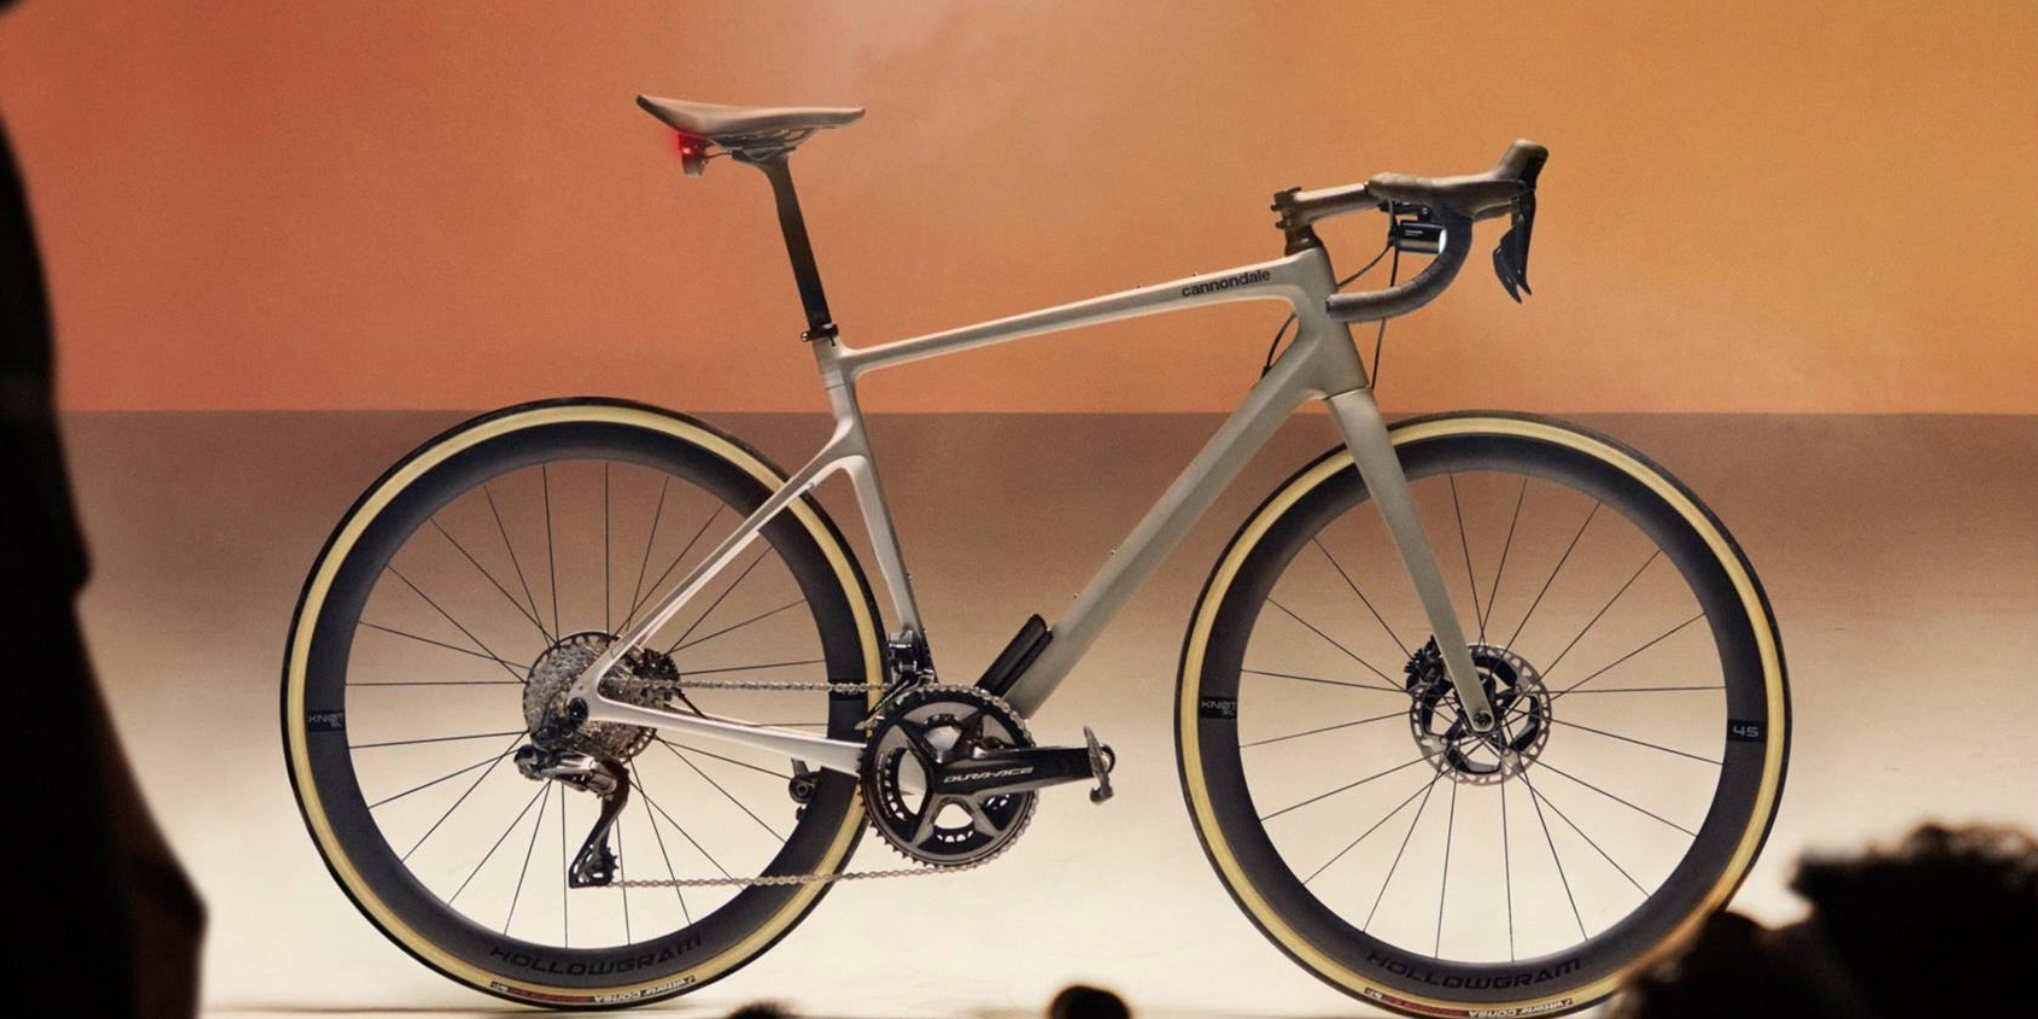 Elegant road bike presented at an exhibit, featuring a modern, minimalist frame design set against a warm, neutral backdrop @ Bici.